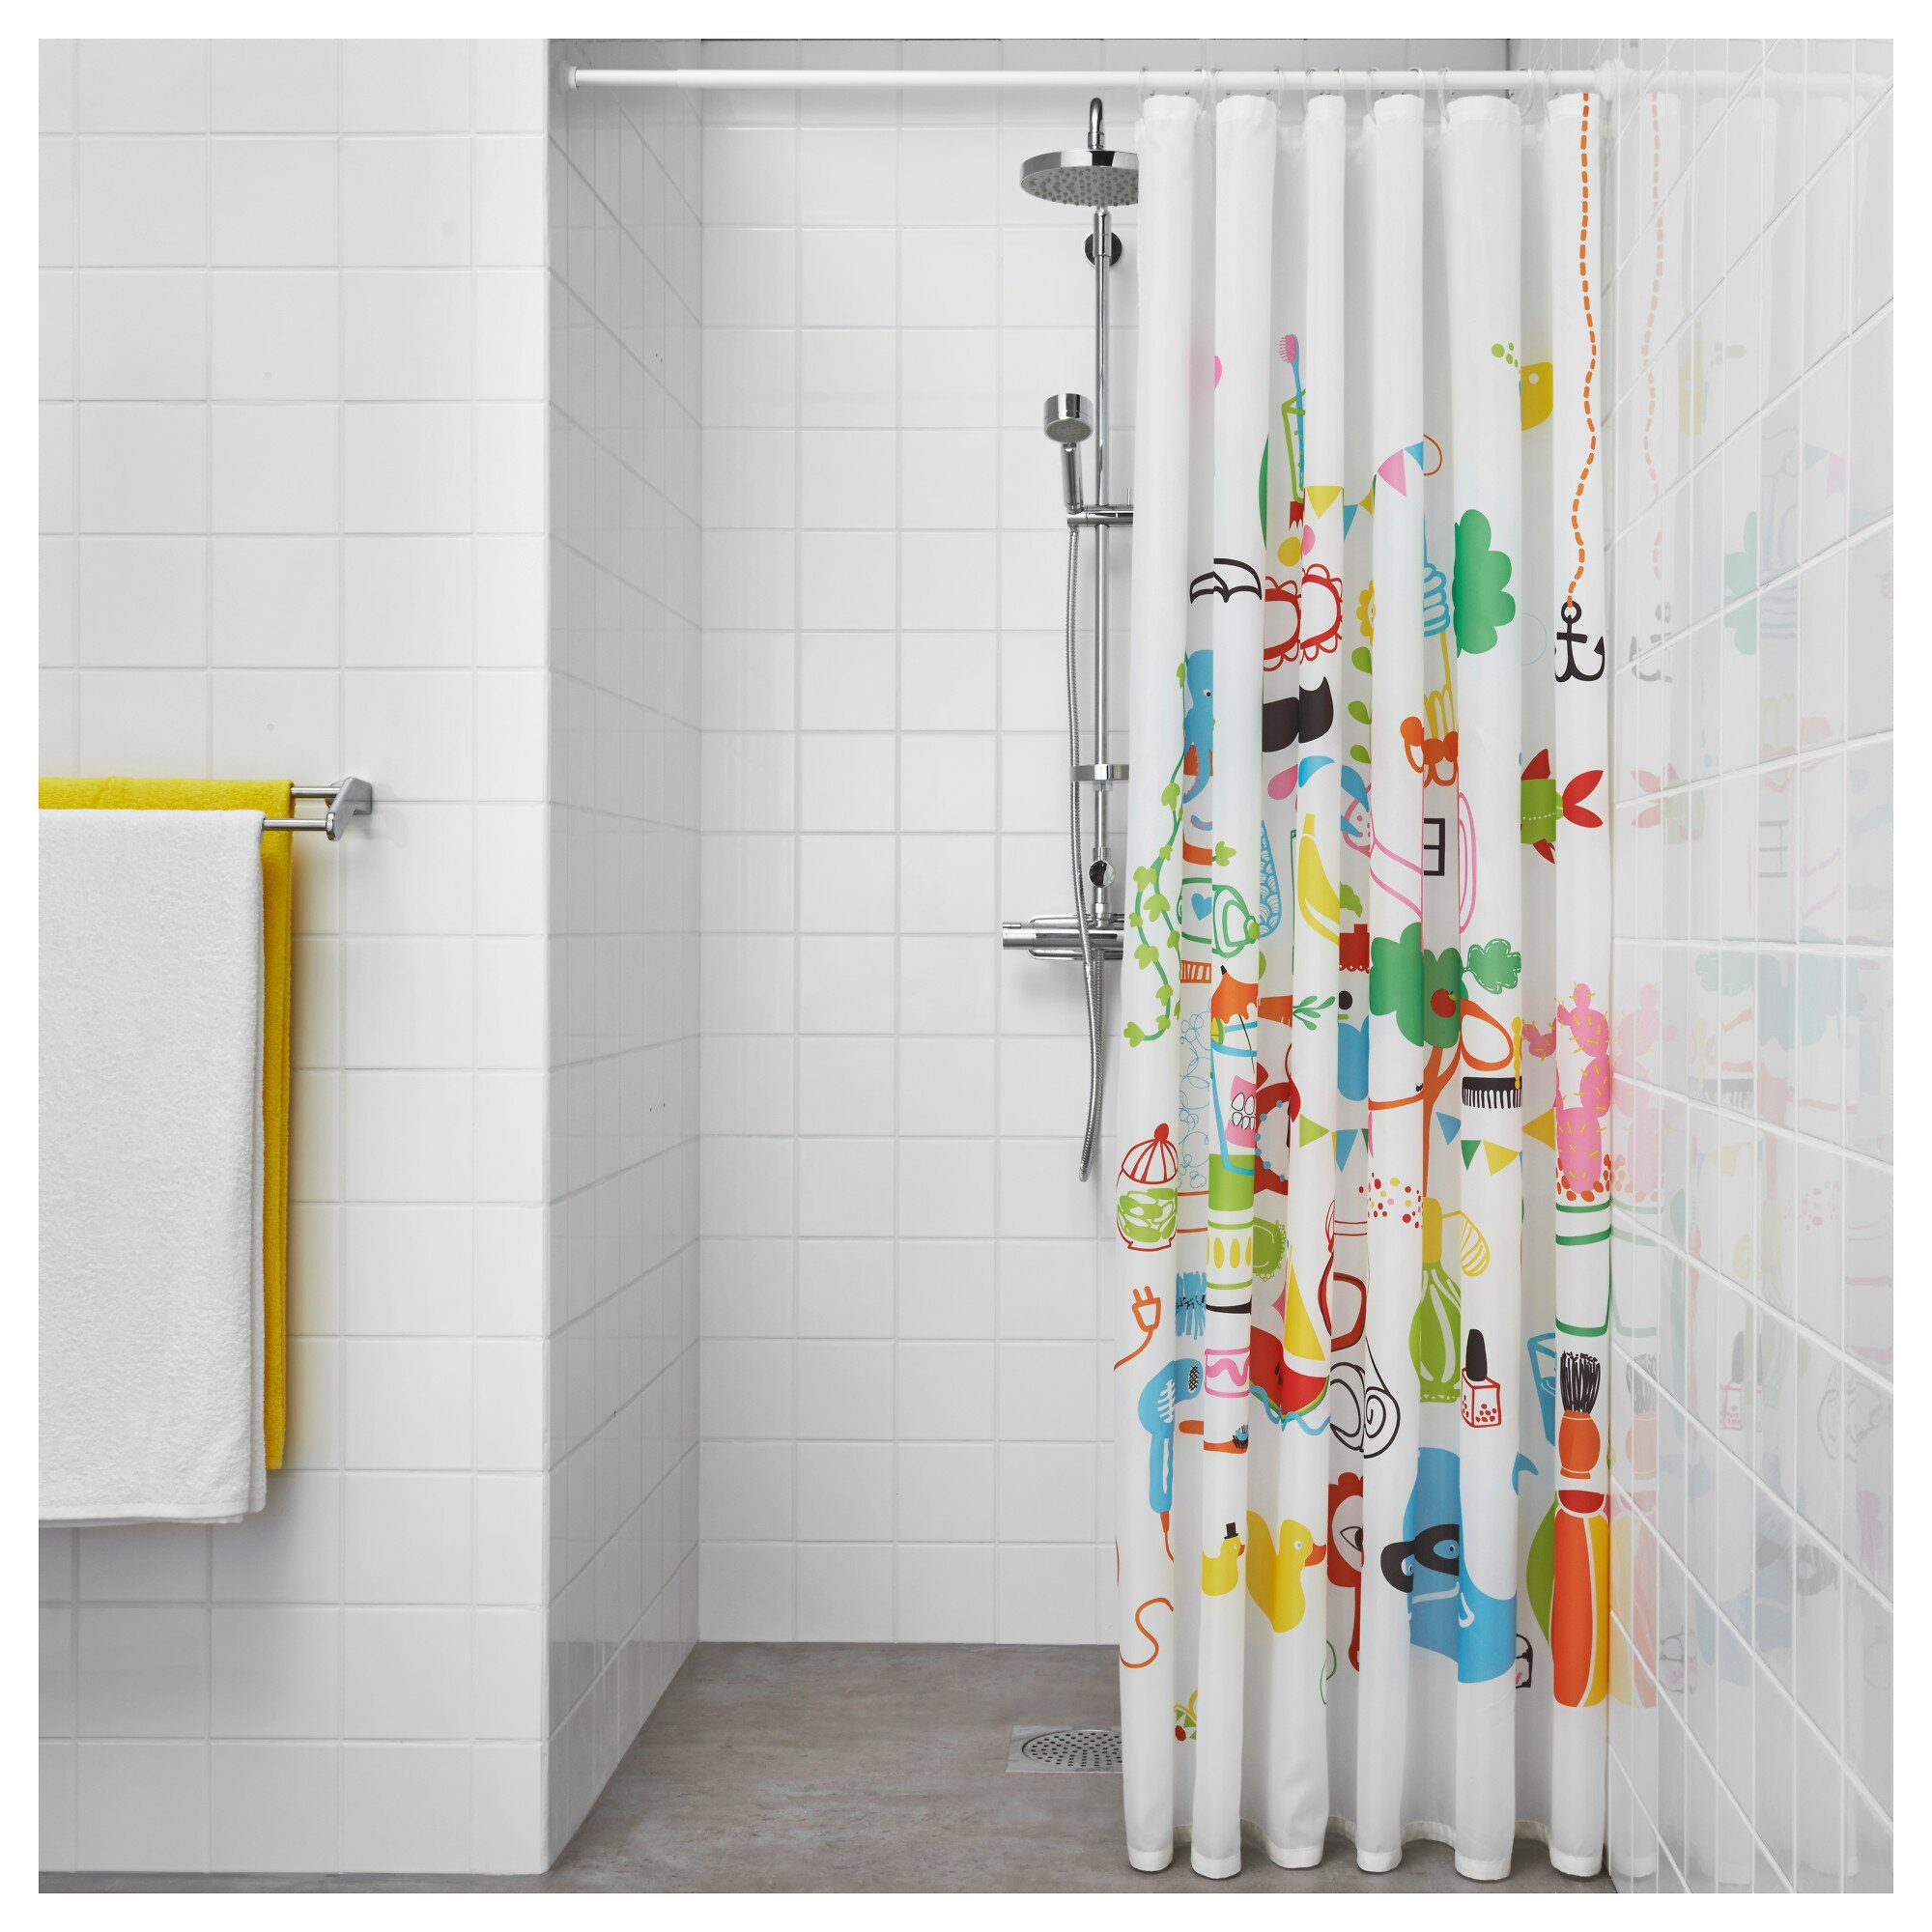 Ikea Shower Curtain for Best Your Bathroom Decoration: Bathroom Curtain Rods | 84 Shower Curtains | Ikea Shower Curtain